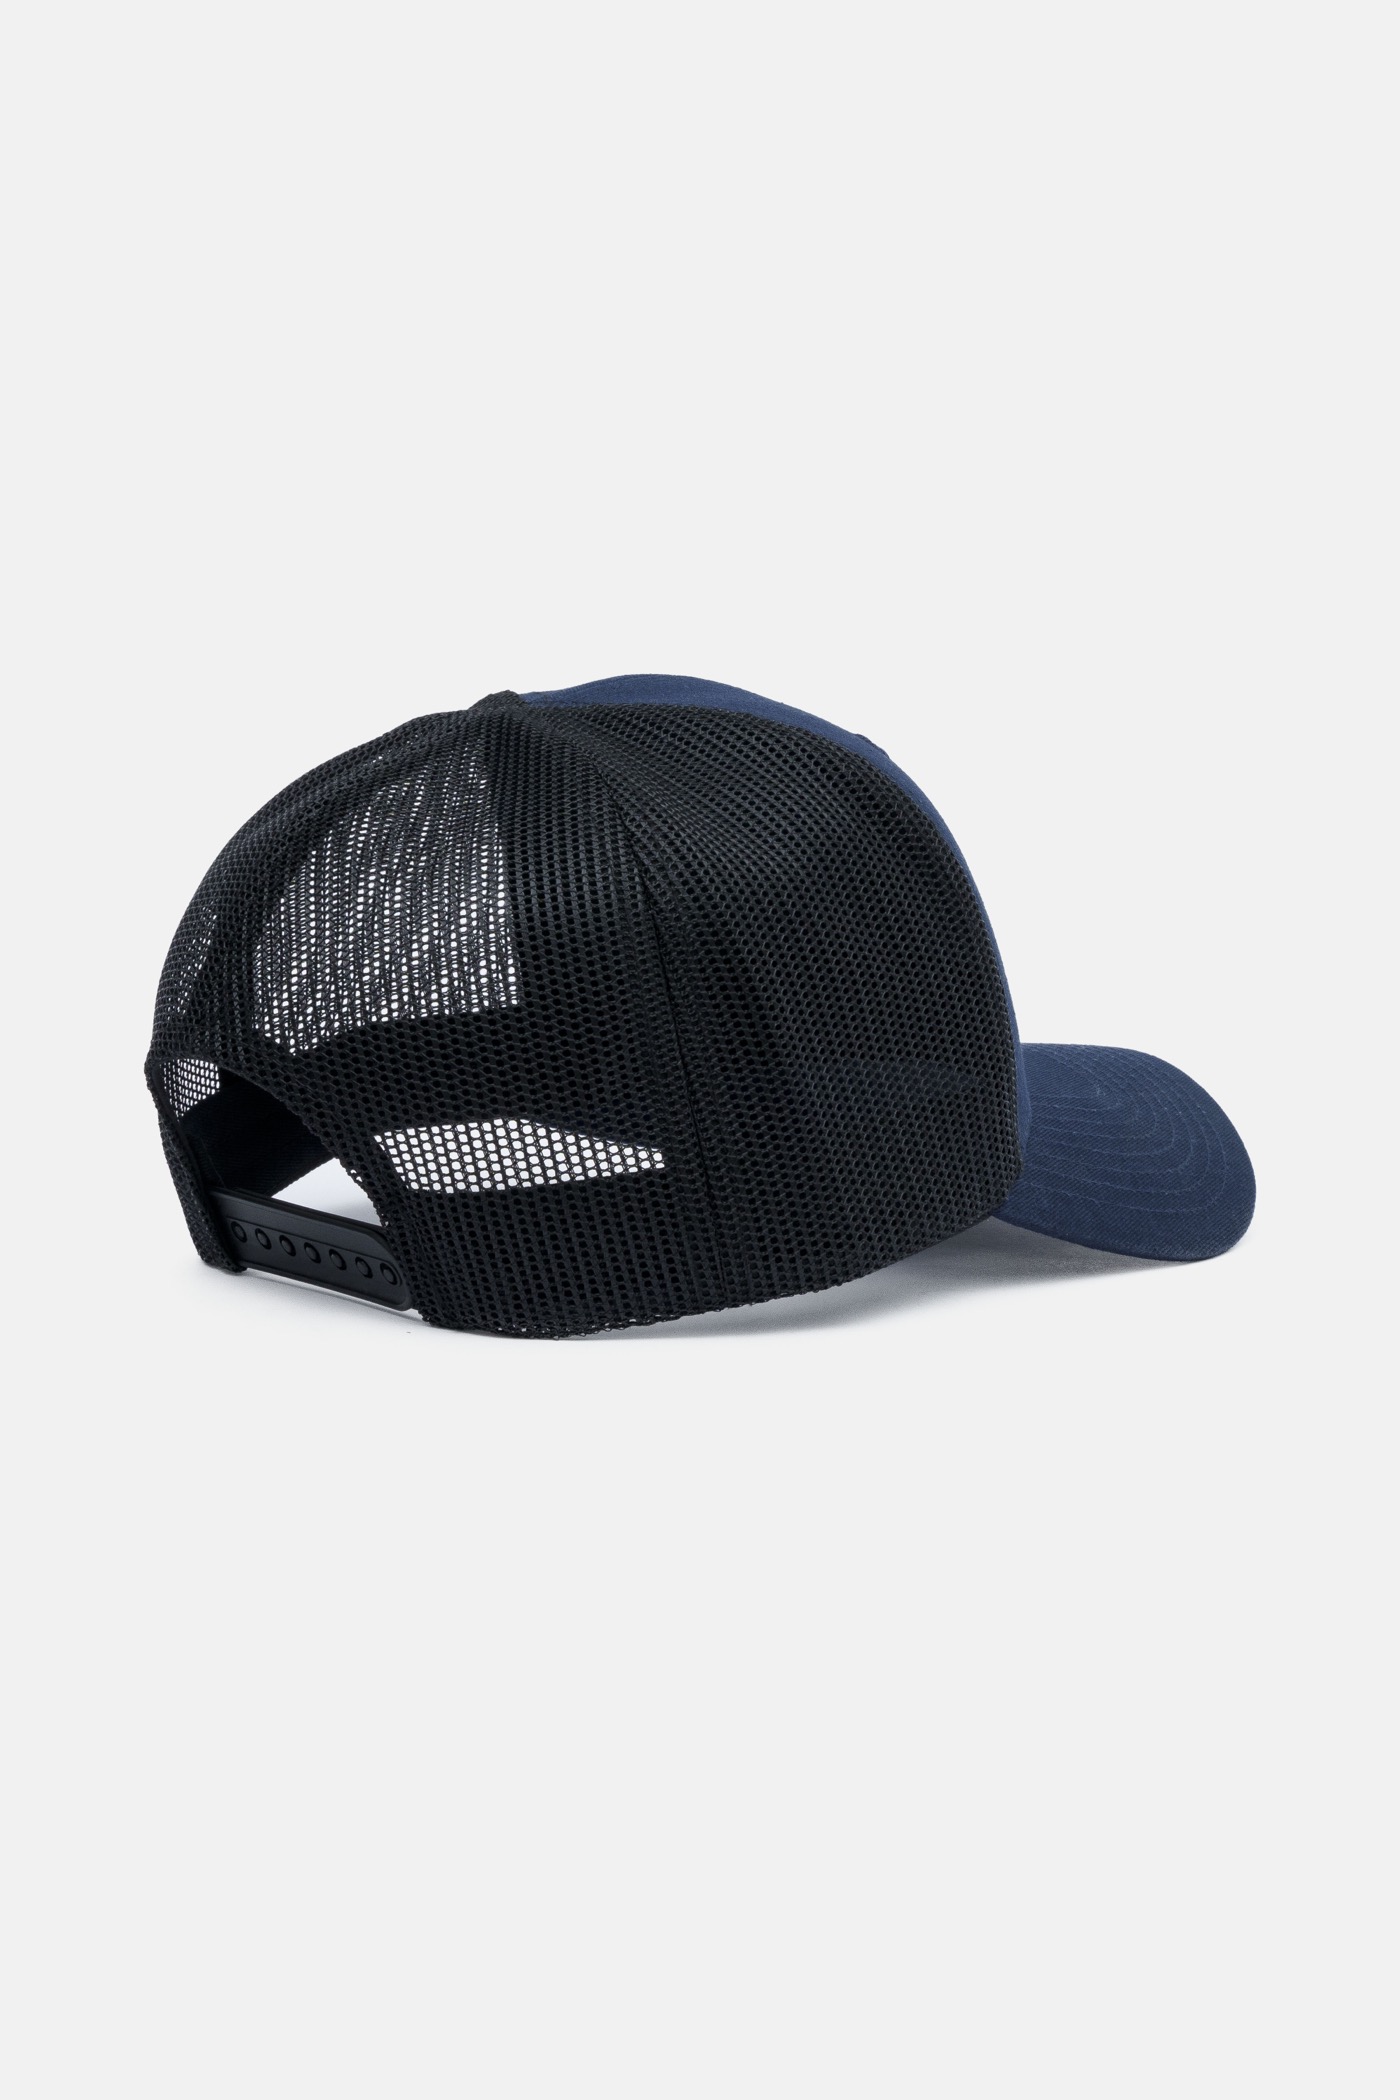 Flash sale - Mũ/Nón lưới trai Baseball Cap Proudly  Xanh Navy 2